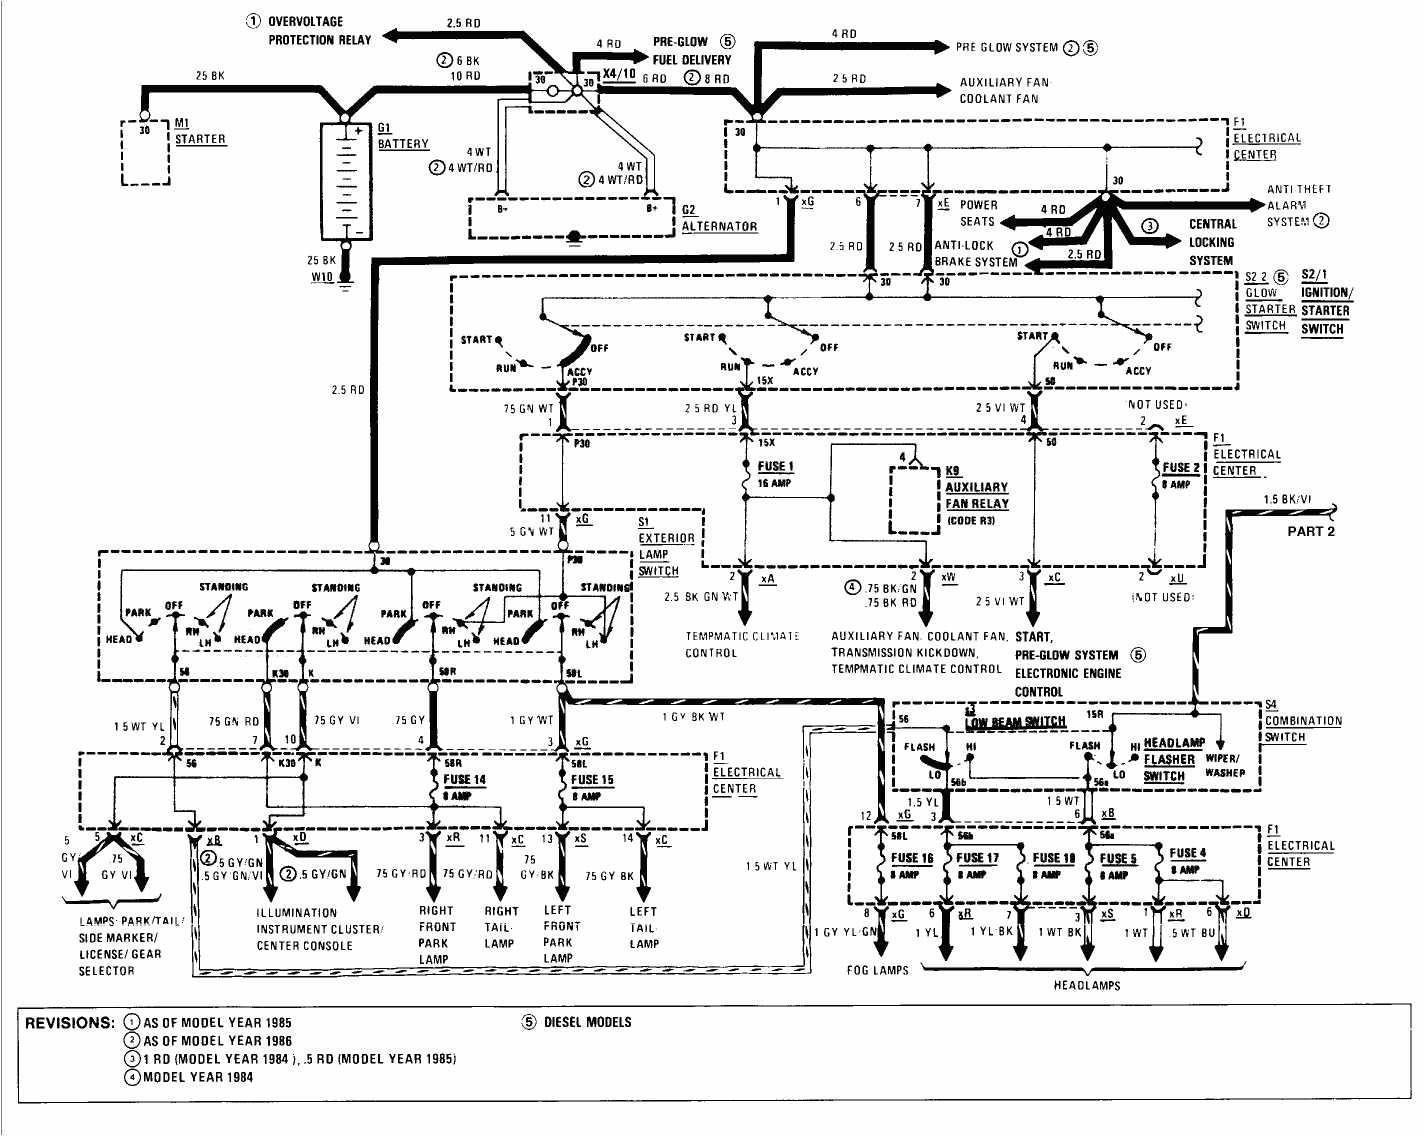 mercedes wiring diagram wiring diagram name 1972 mercedes benz wiring diagrams wiring diagram perfomance mercedes w203